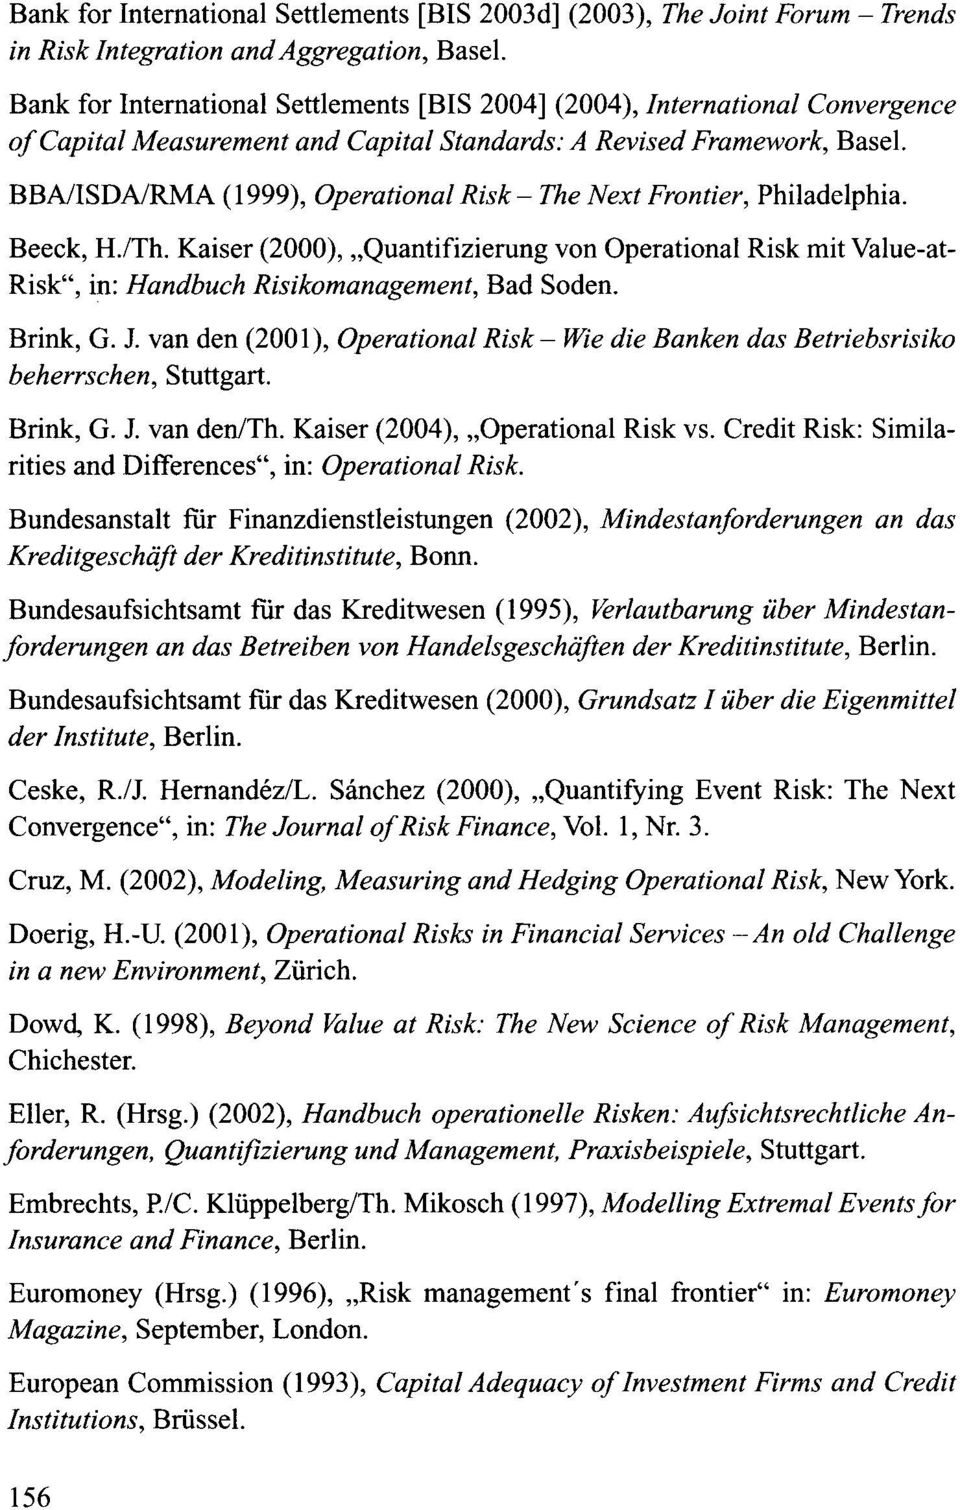 BBAlISDAIRMA (1999), Operational Risk - The Next Frontier, Philadelphia. Beeck, H./Th.